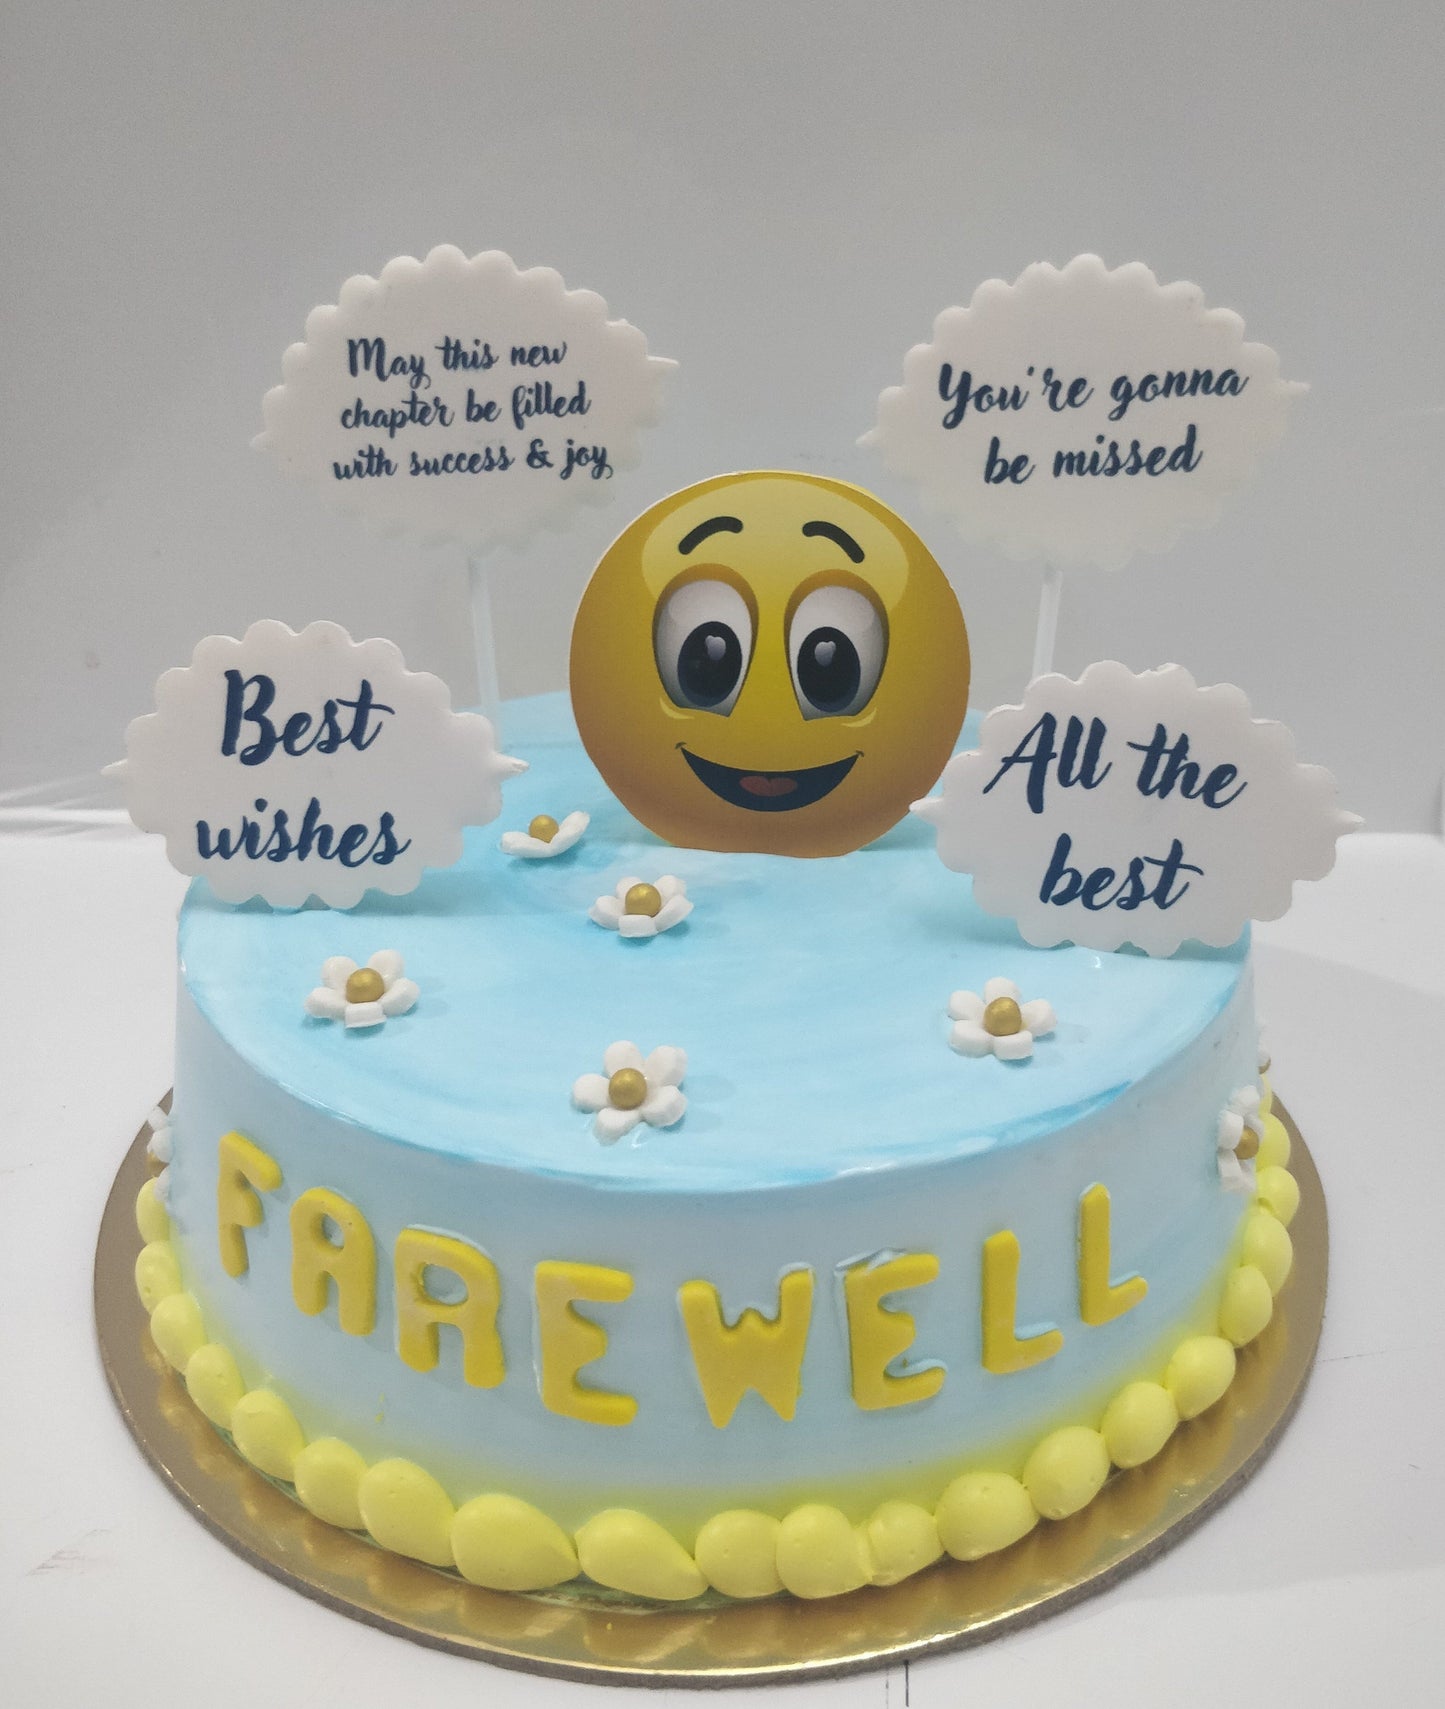 legateaucakes Farewell Wishes Cake